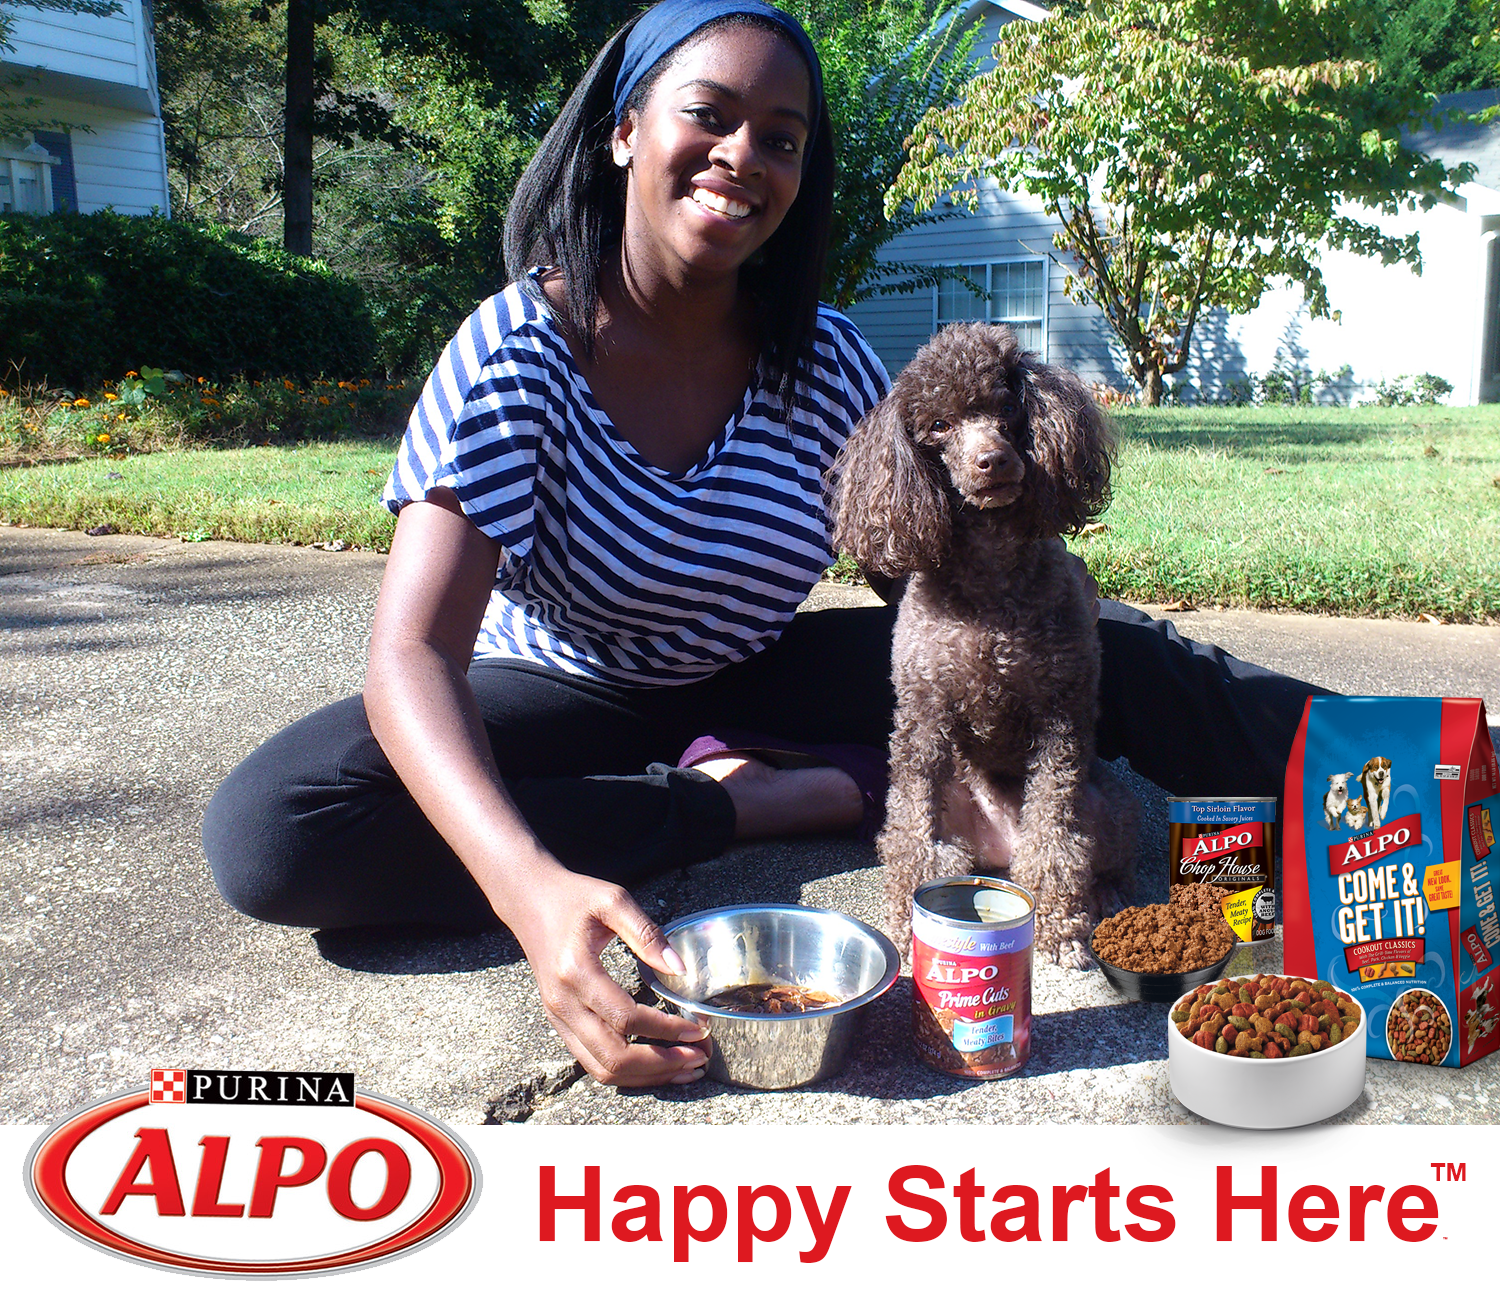 Happy Starts With Alpo - Khloe trying Alpo Dog Food